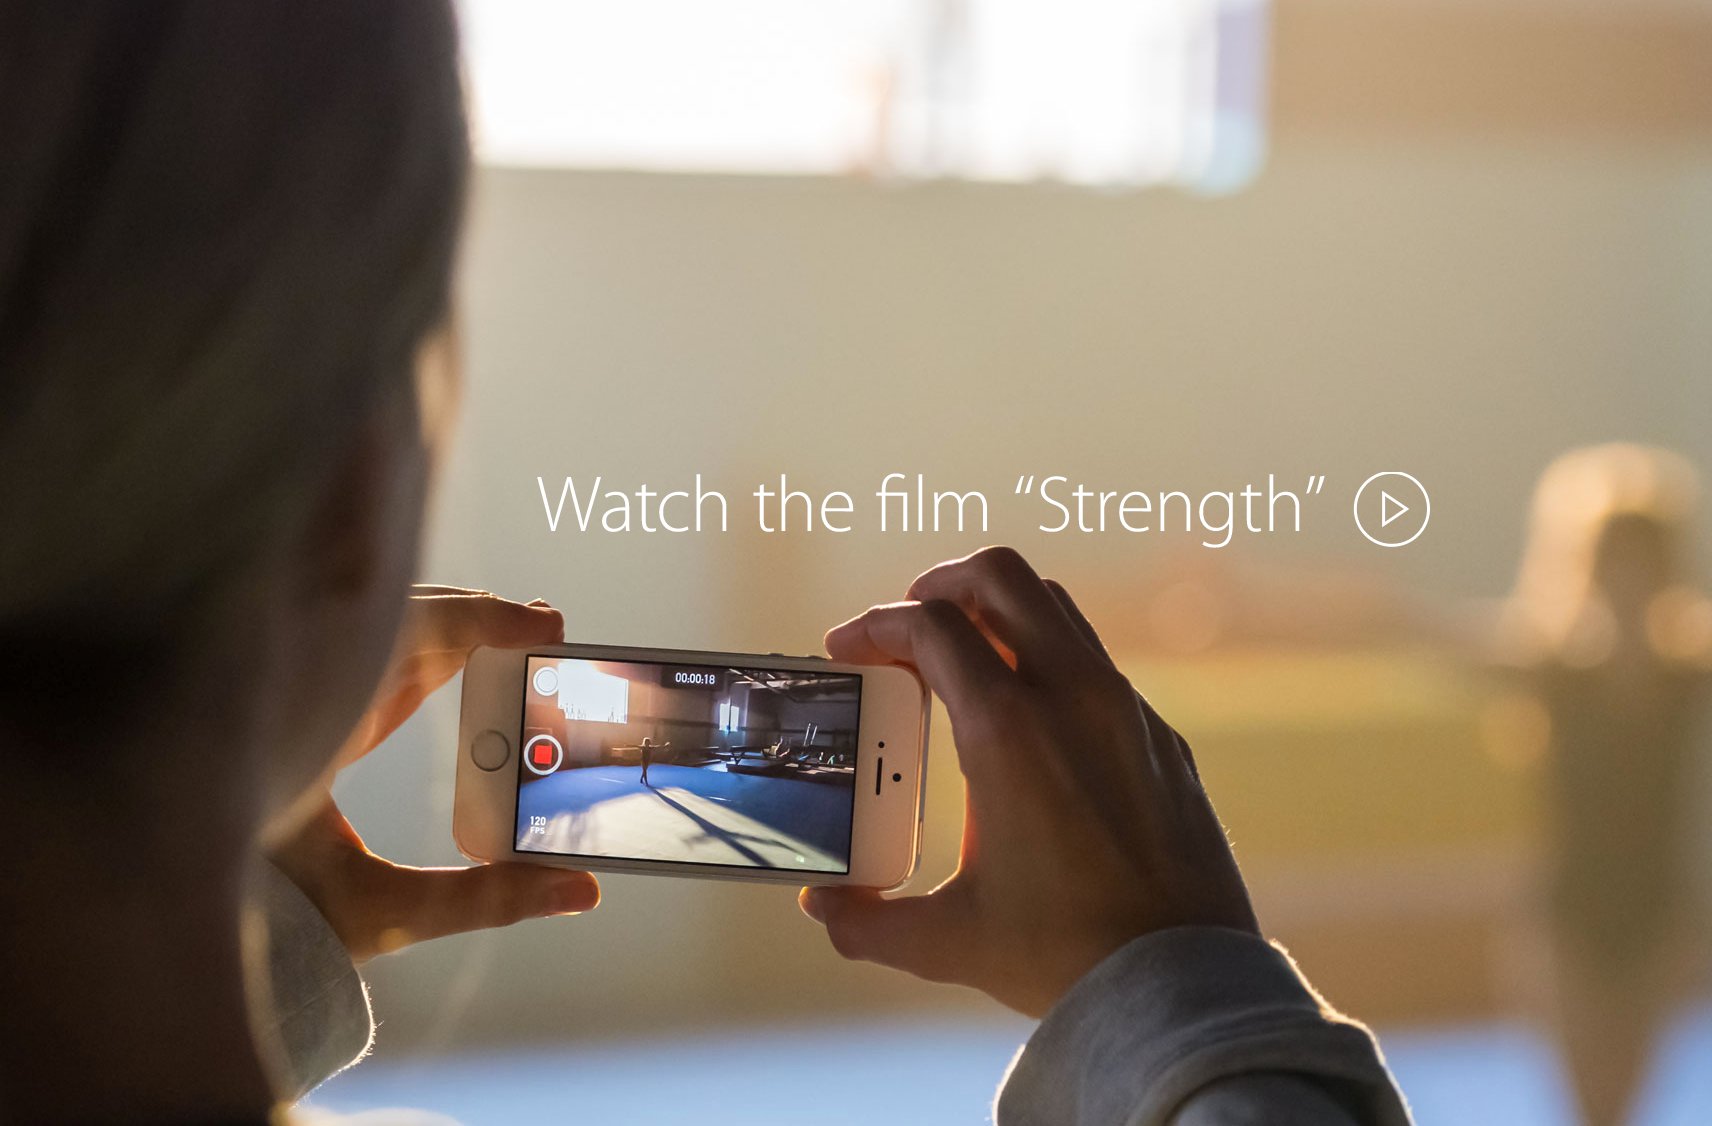 iPhone 5s Stärke: Fitness, Sport & Gesundheit im Fokus 9